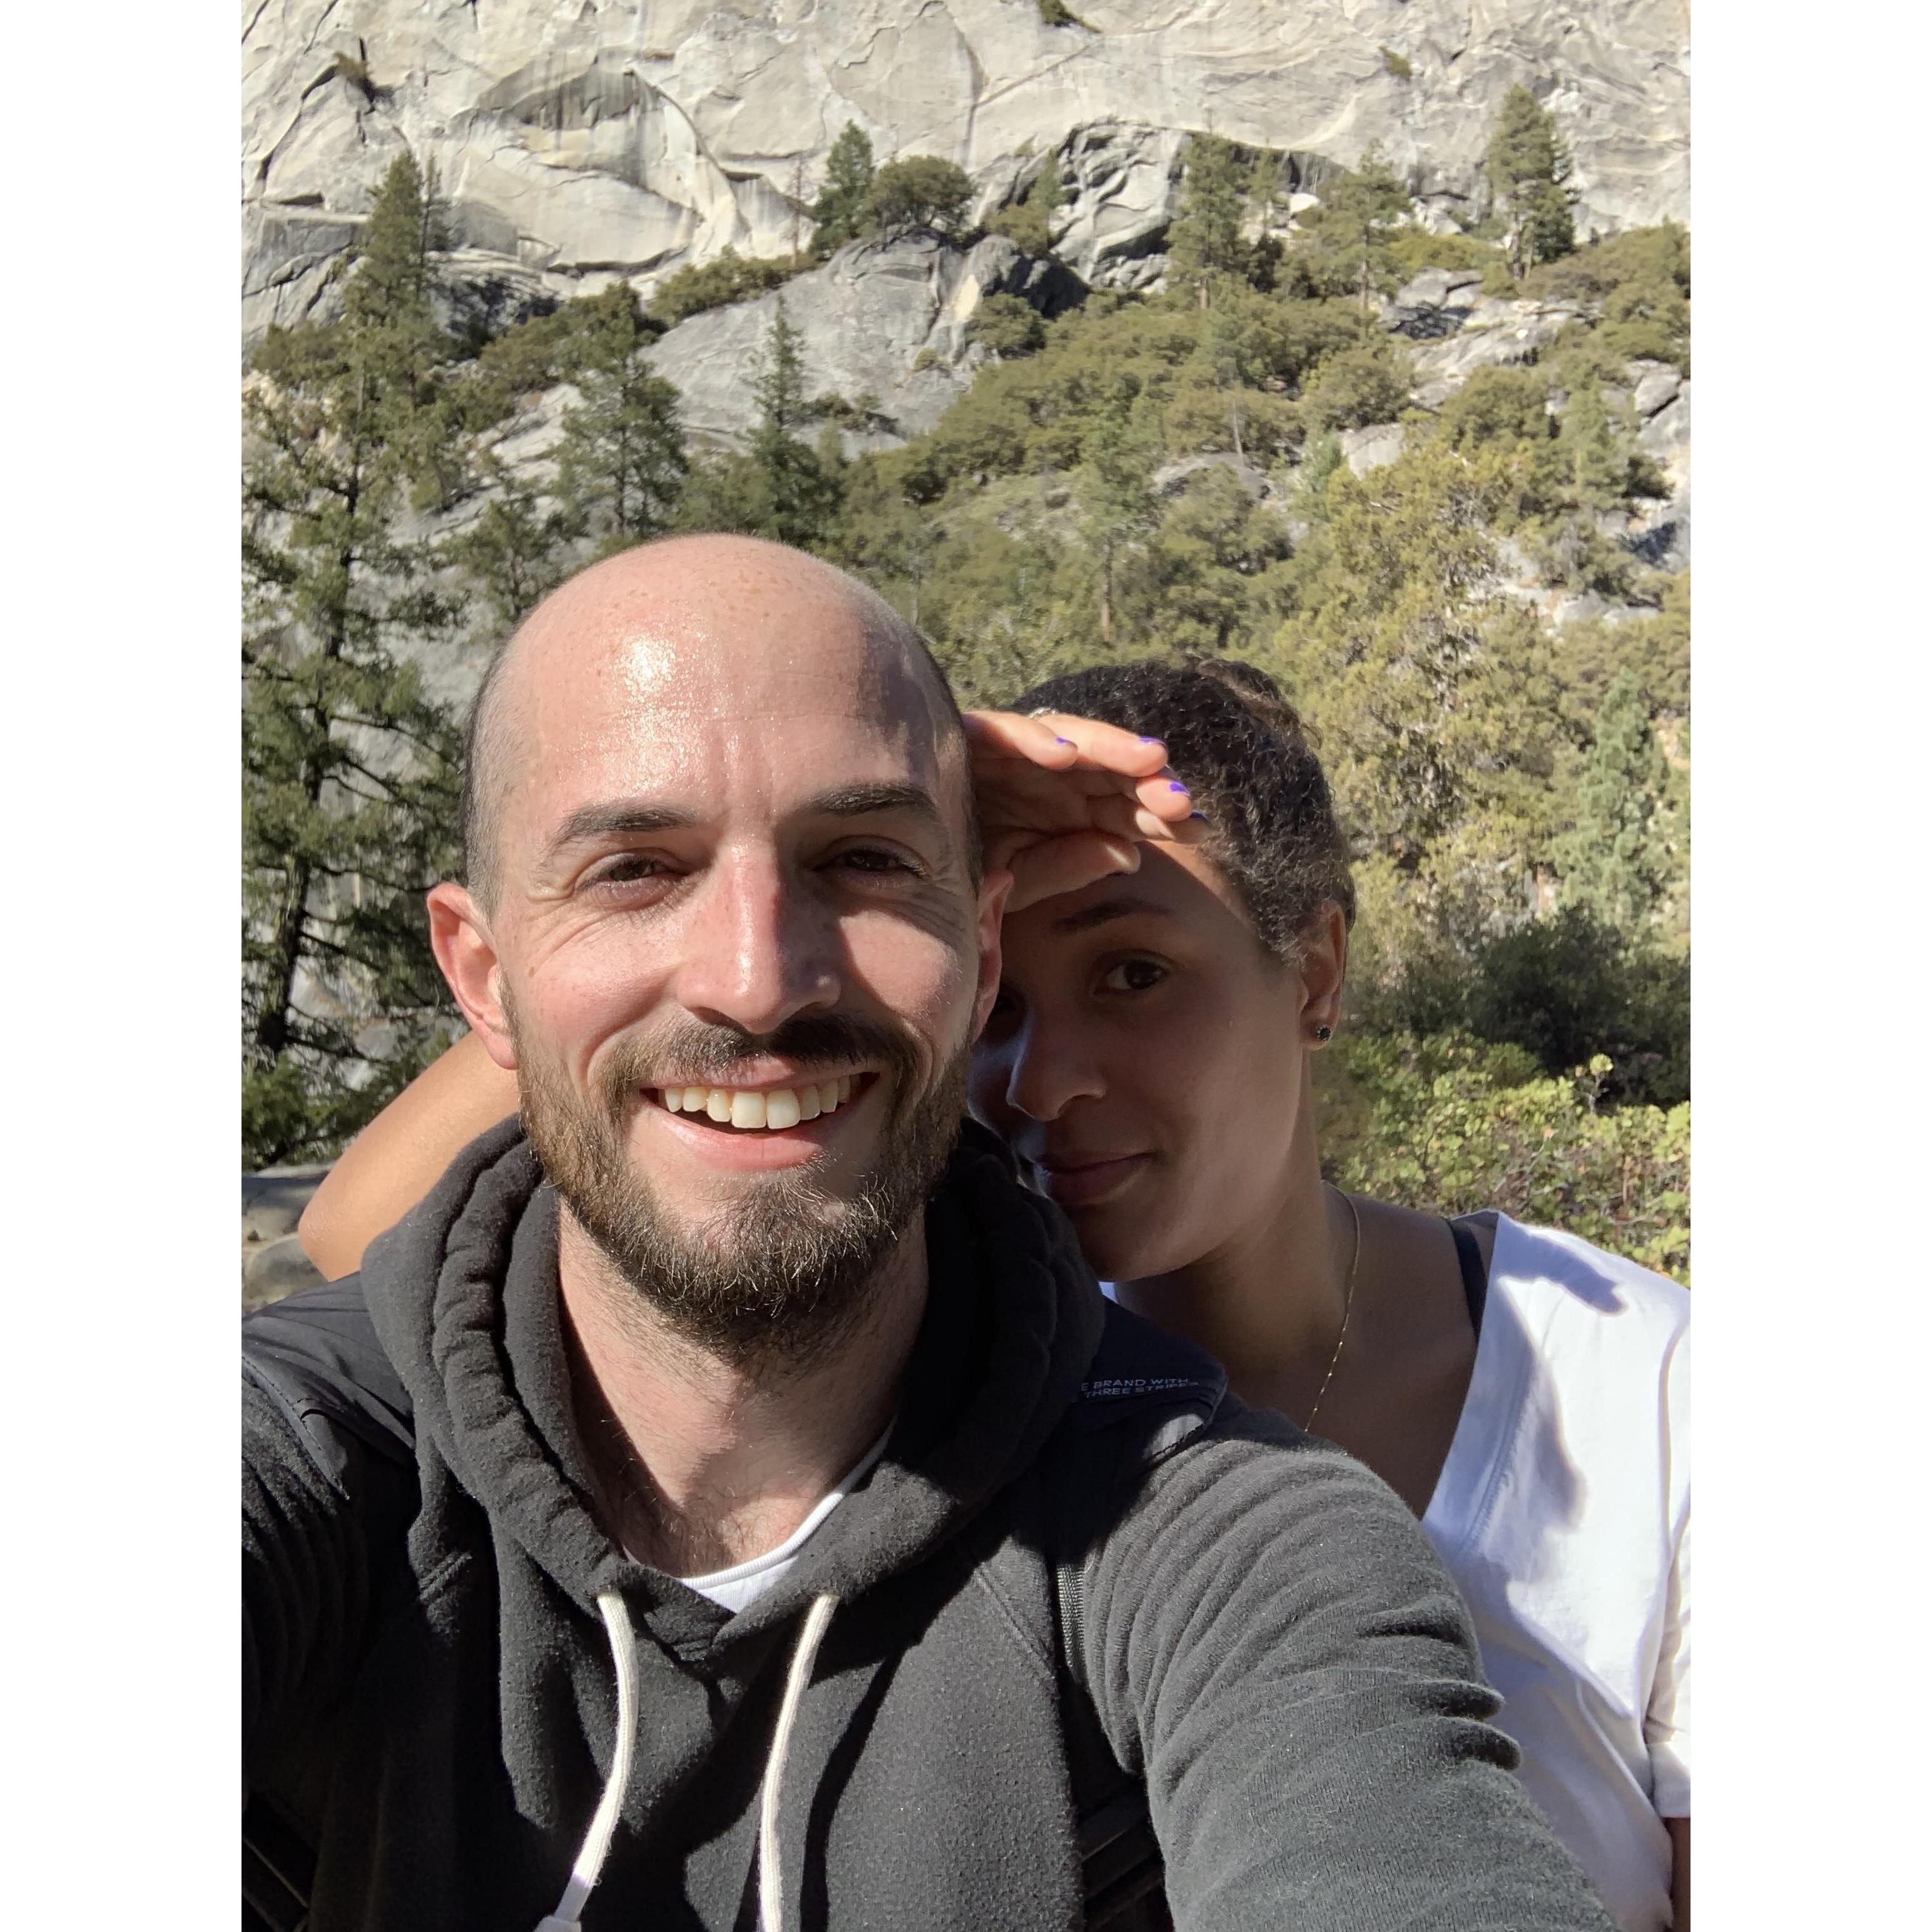 A very long hike in Yosemite